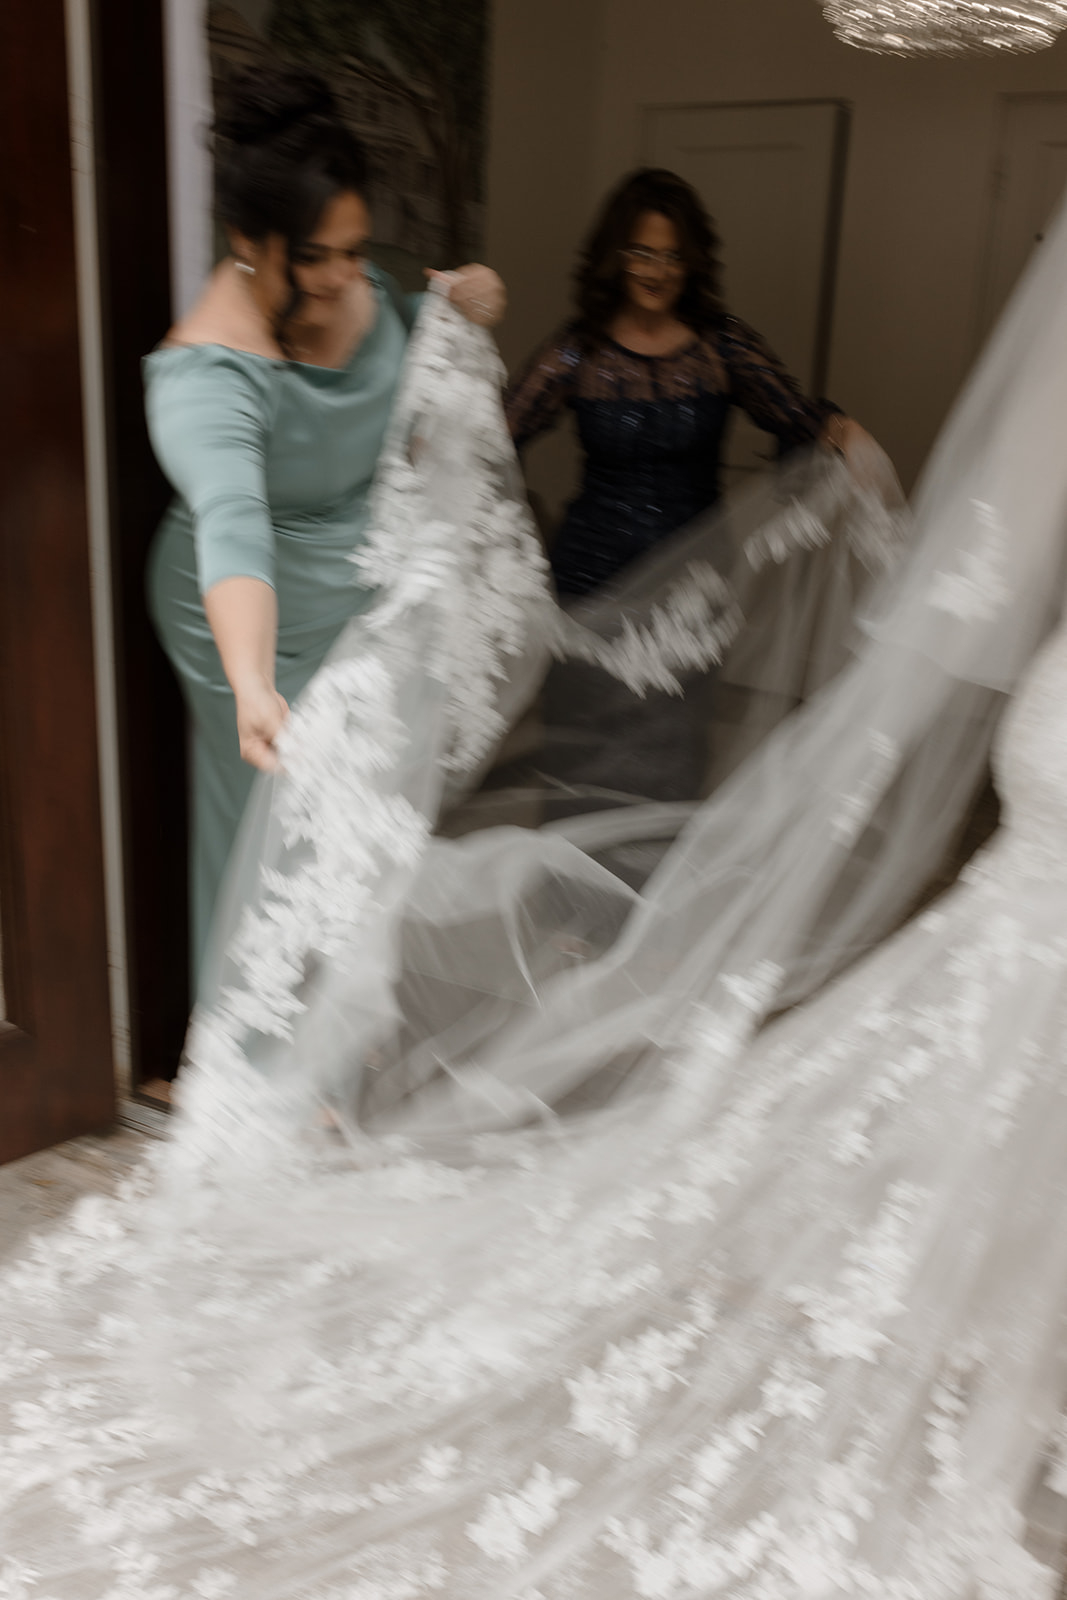 Bride getting dressed photos